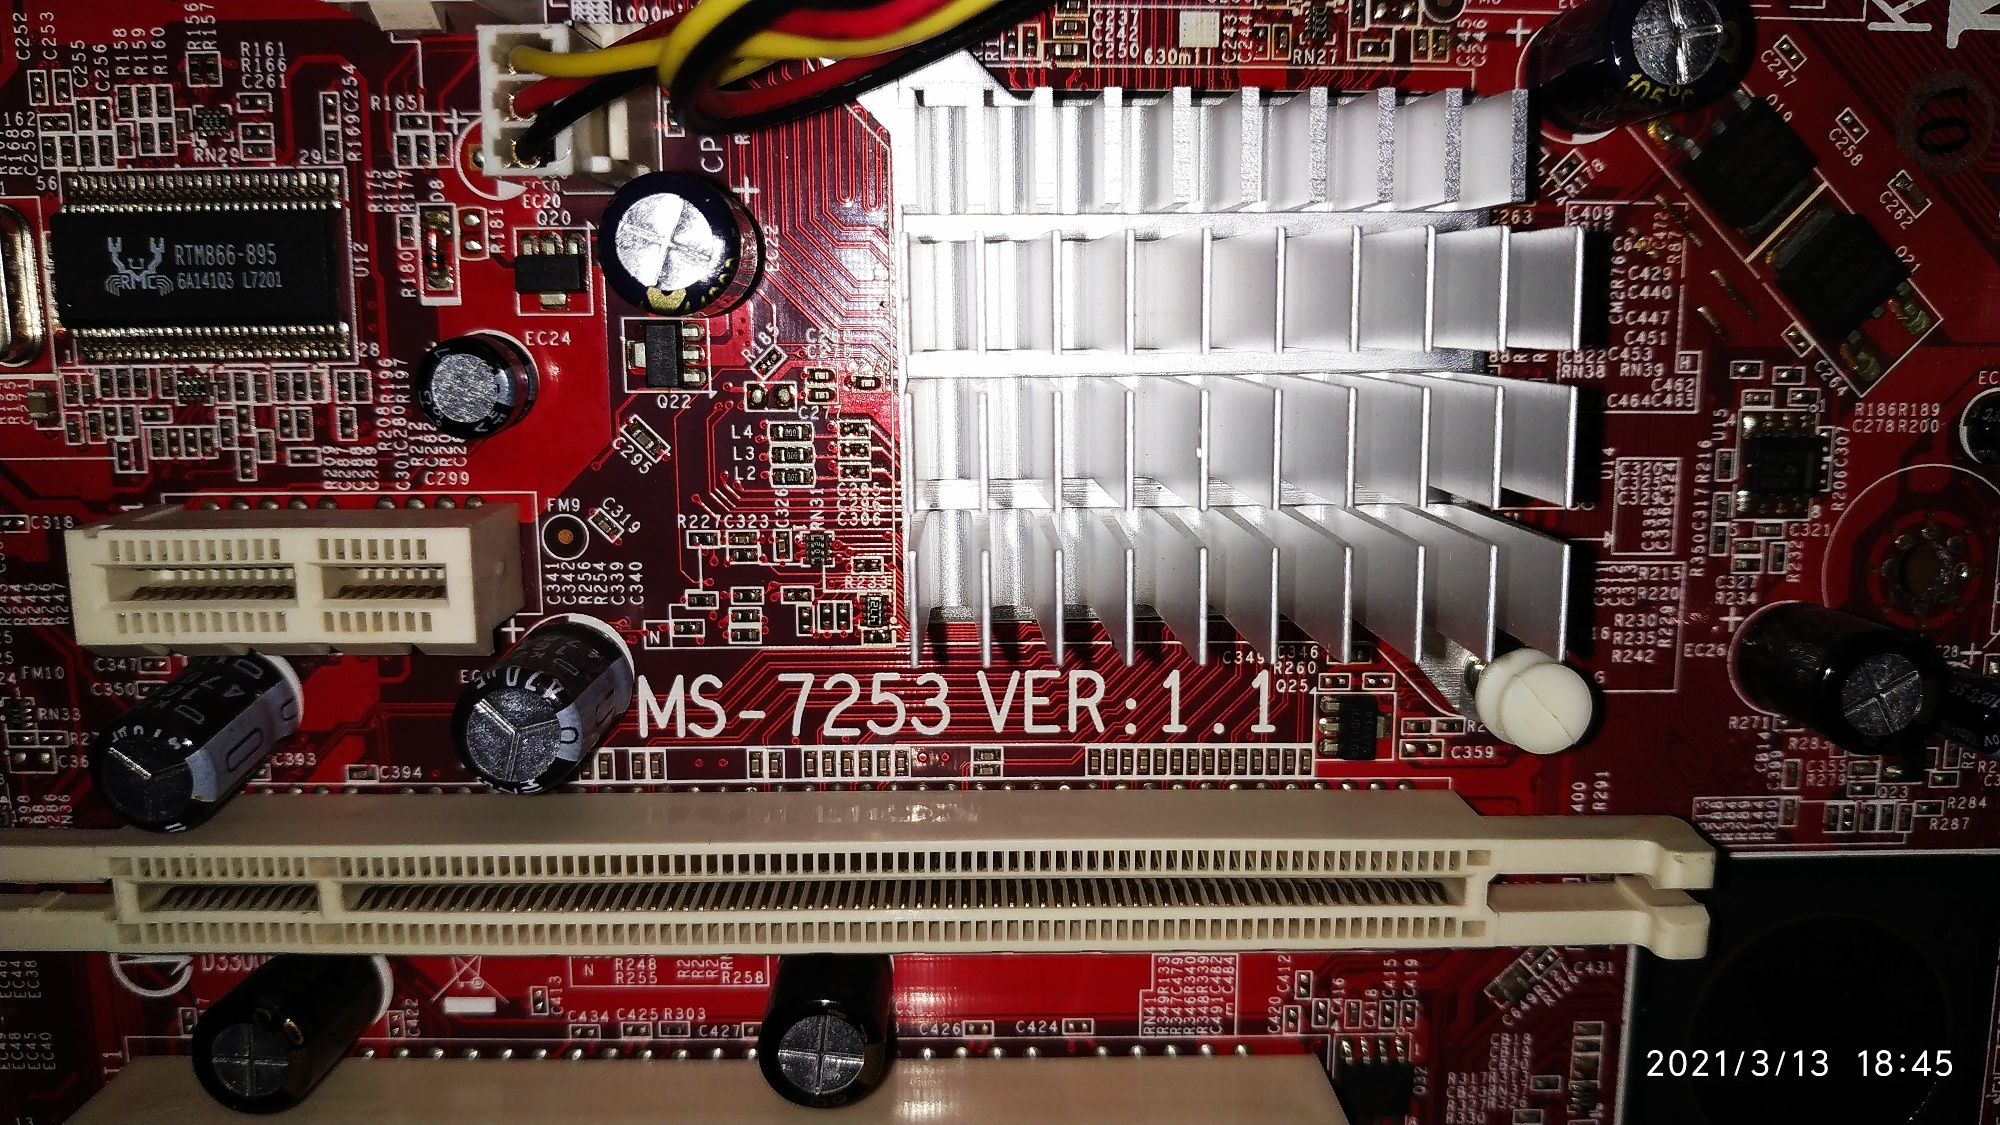 Материнская плата MSI K9VGM-V AM2 + процессор